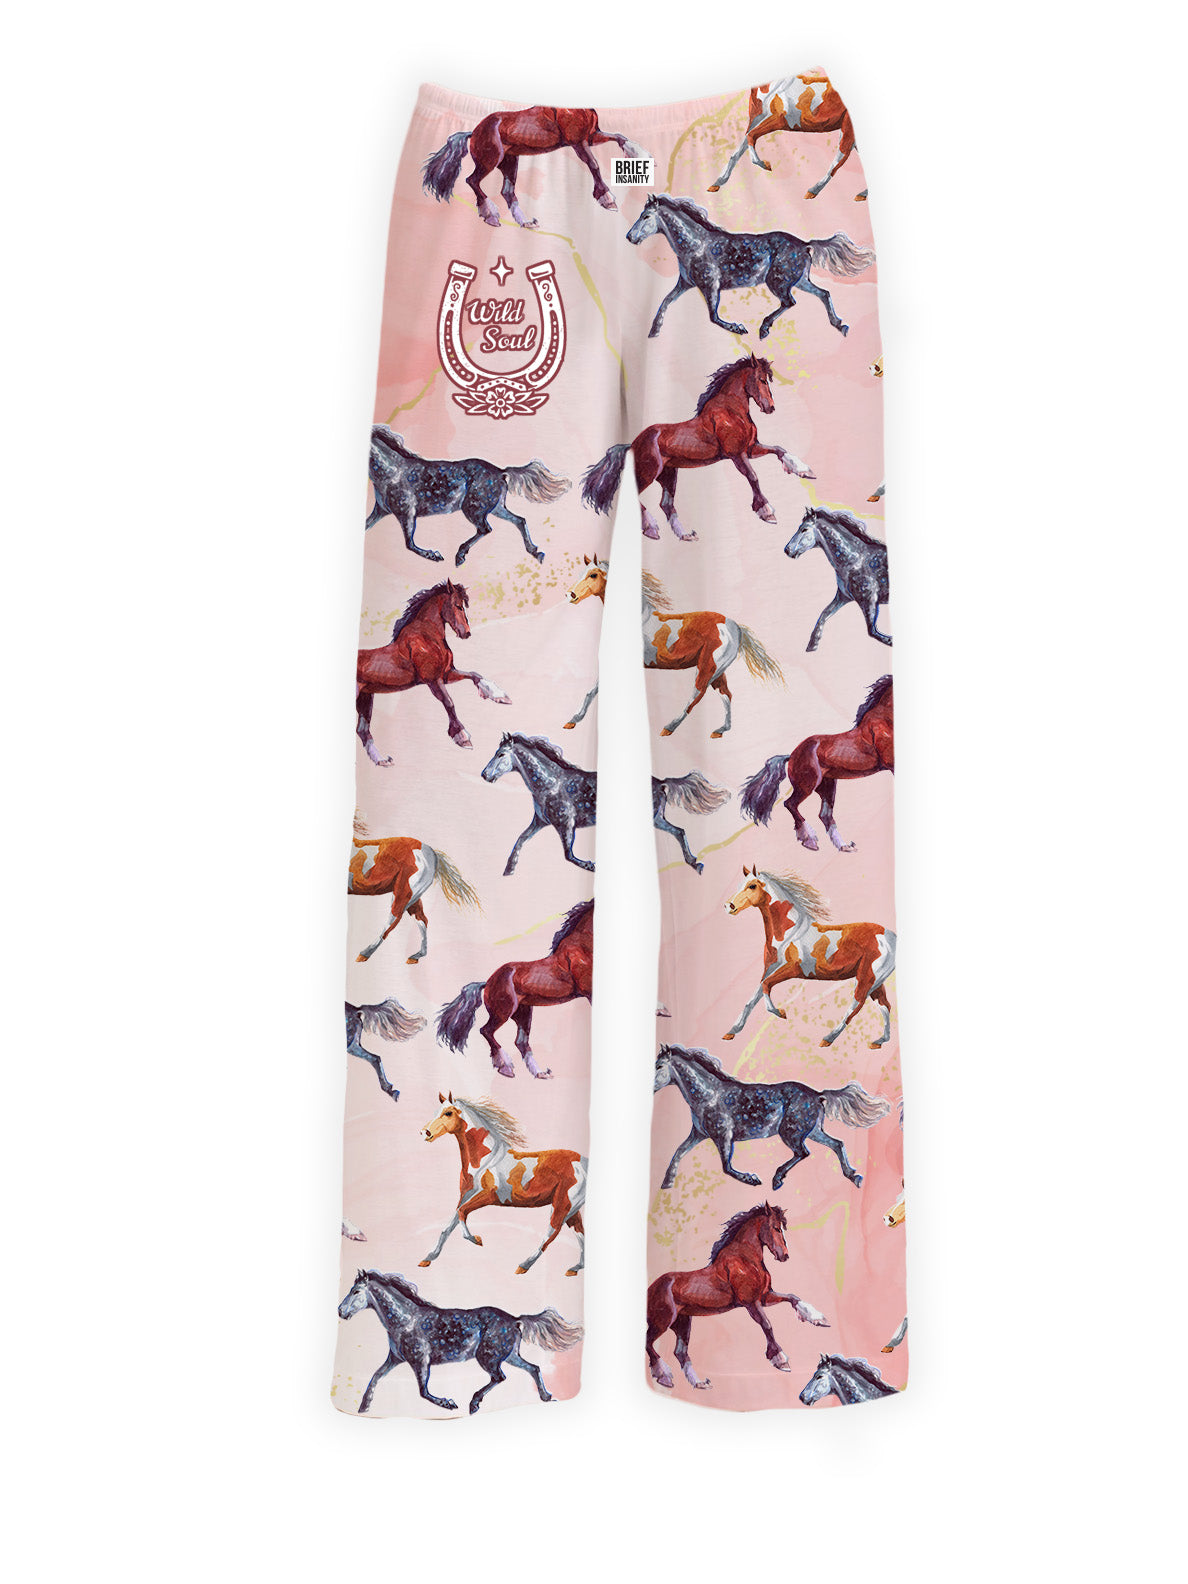 BRIEF INSANITY Wild Soul Horse Pajama Lounge Pants